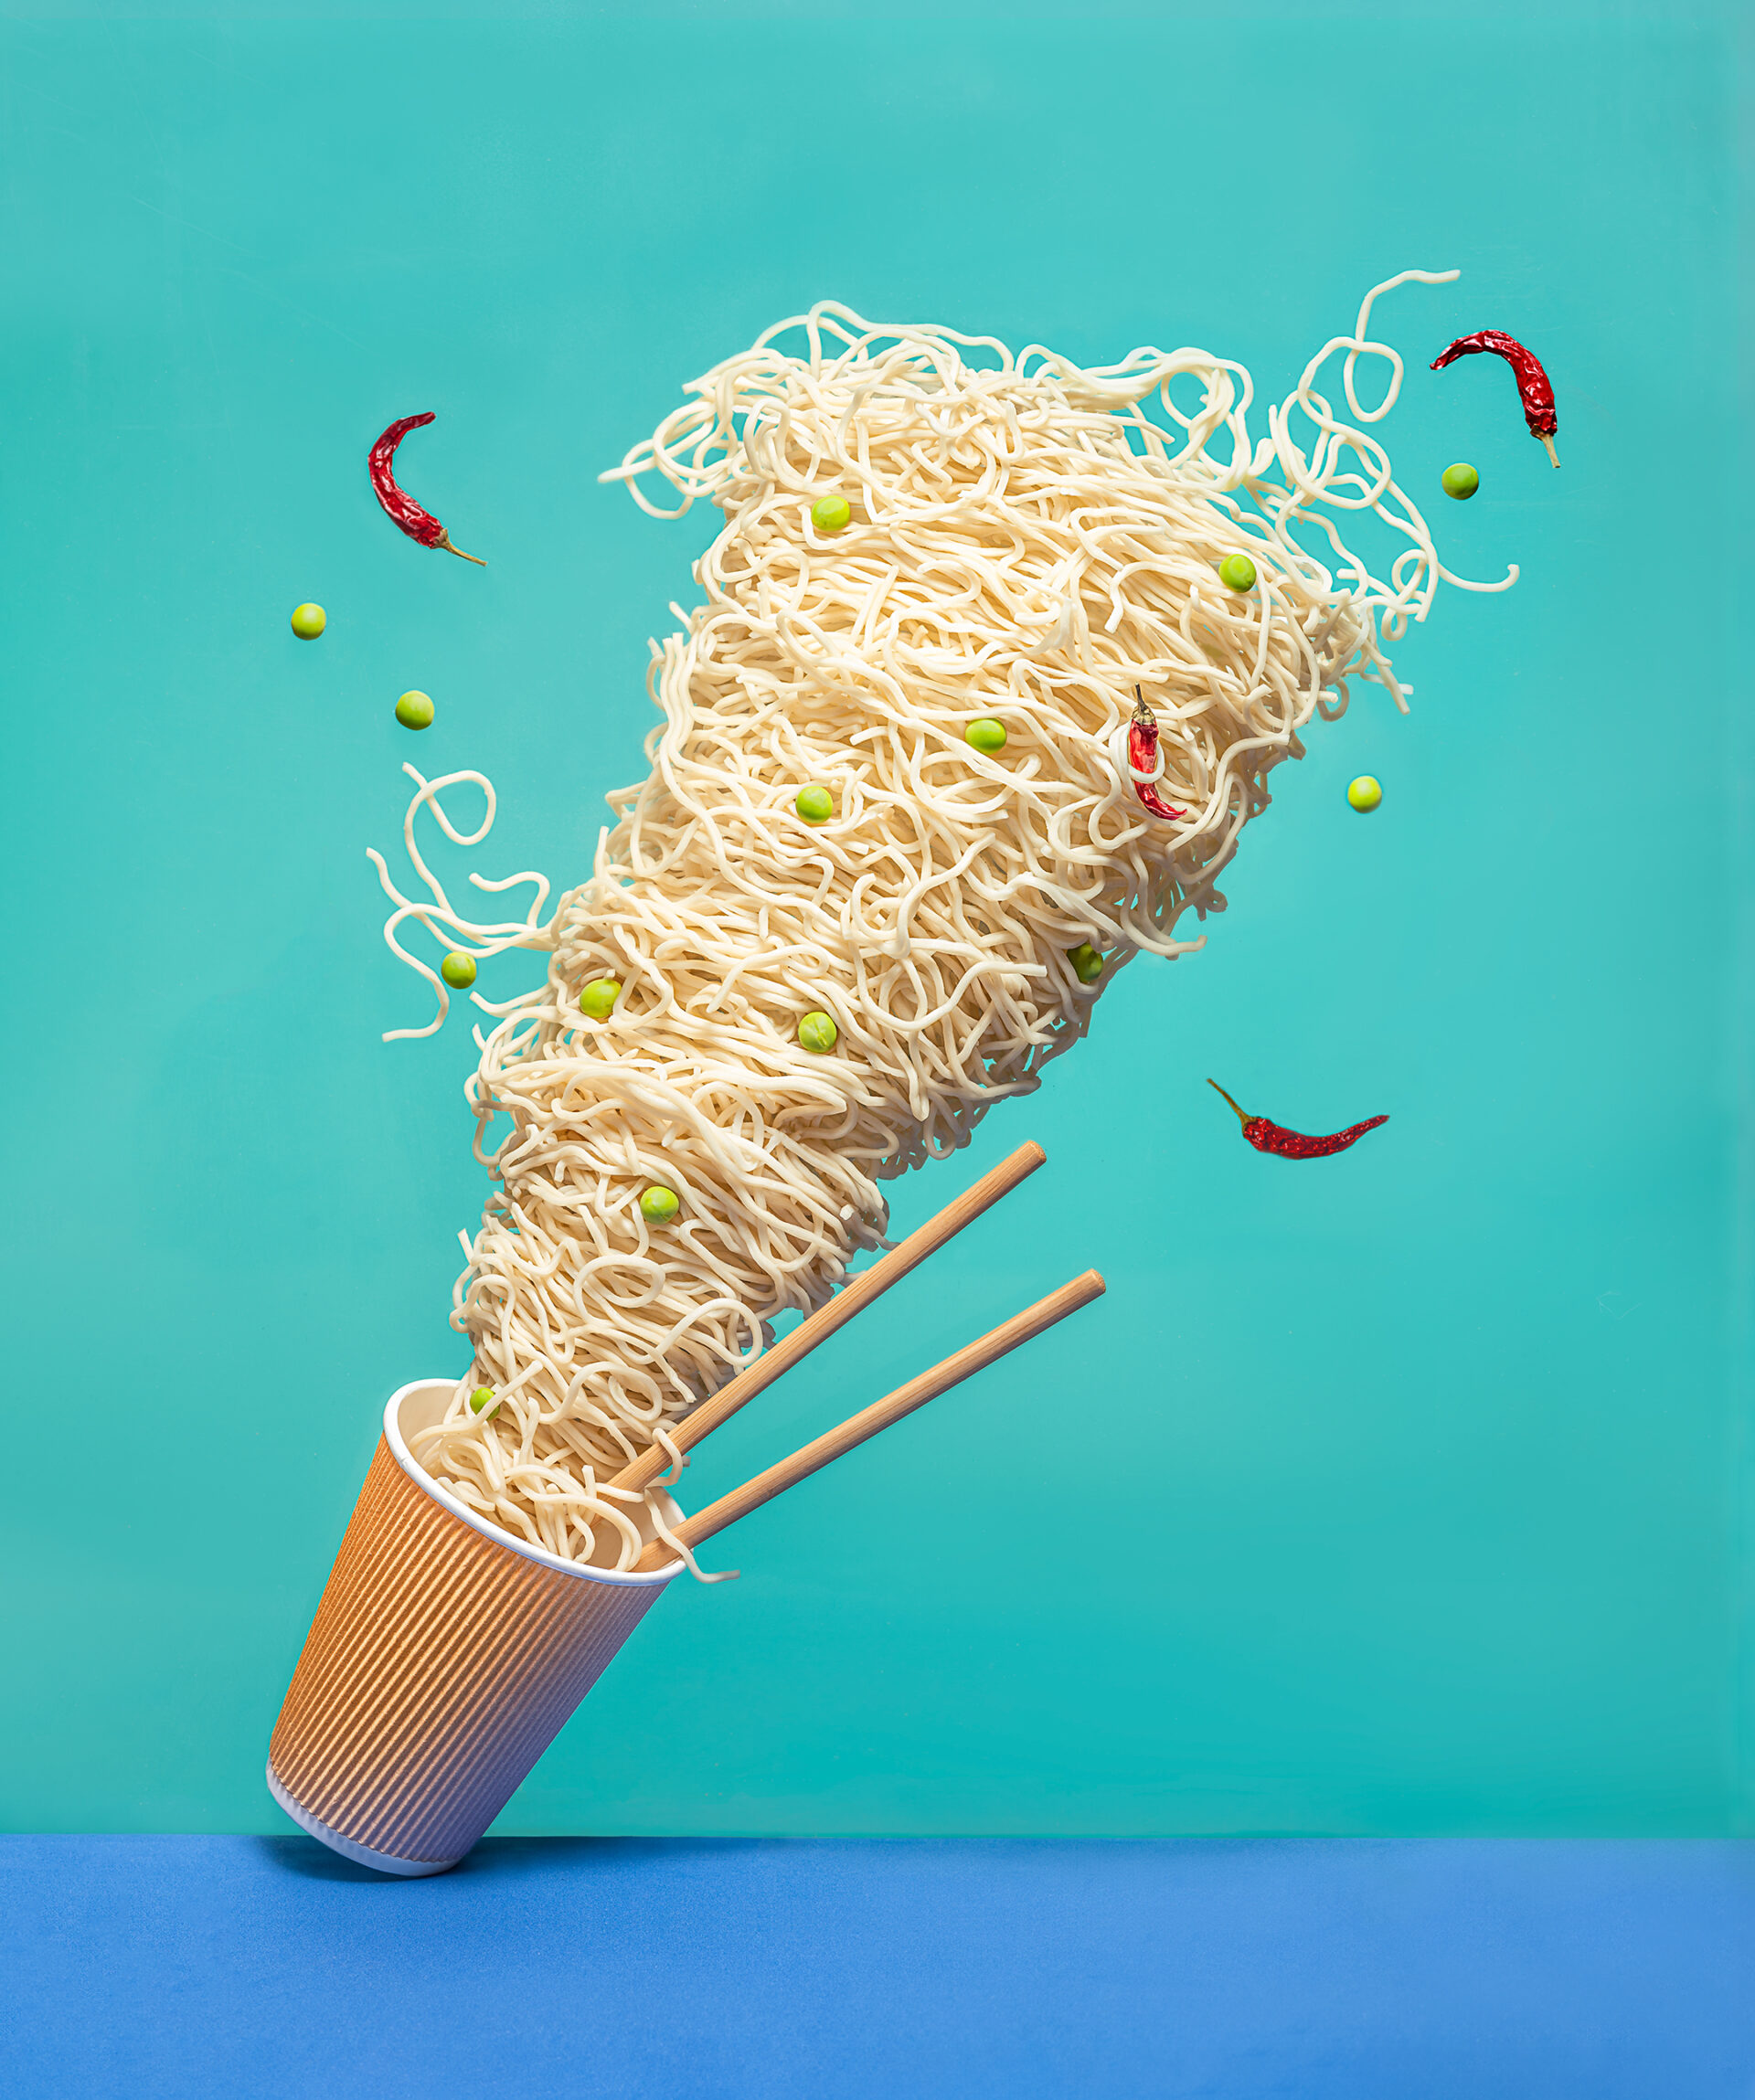 Home economist & food stylist Madrid Noodles tornado